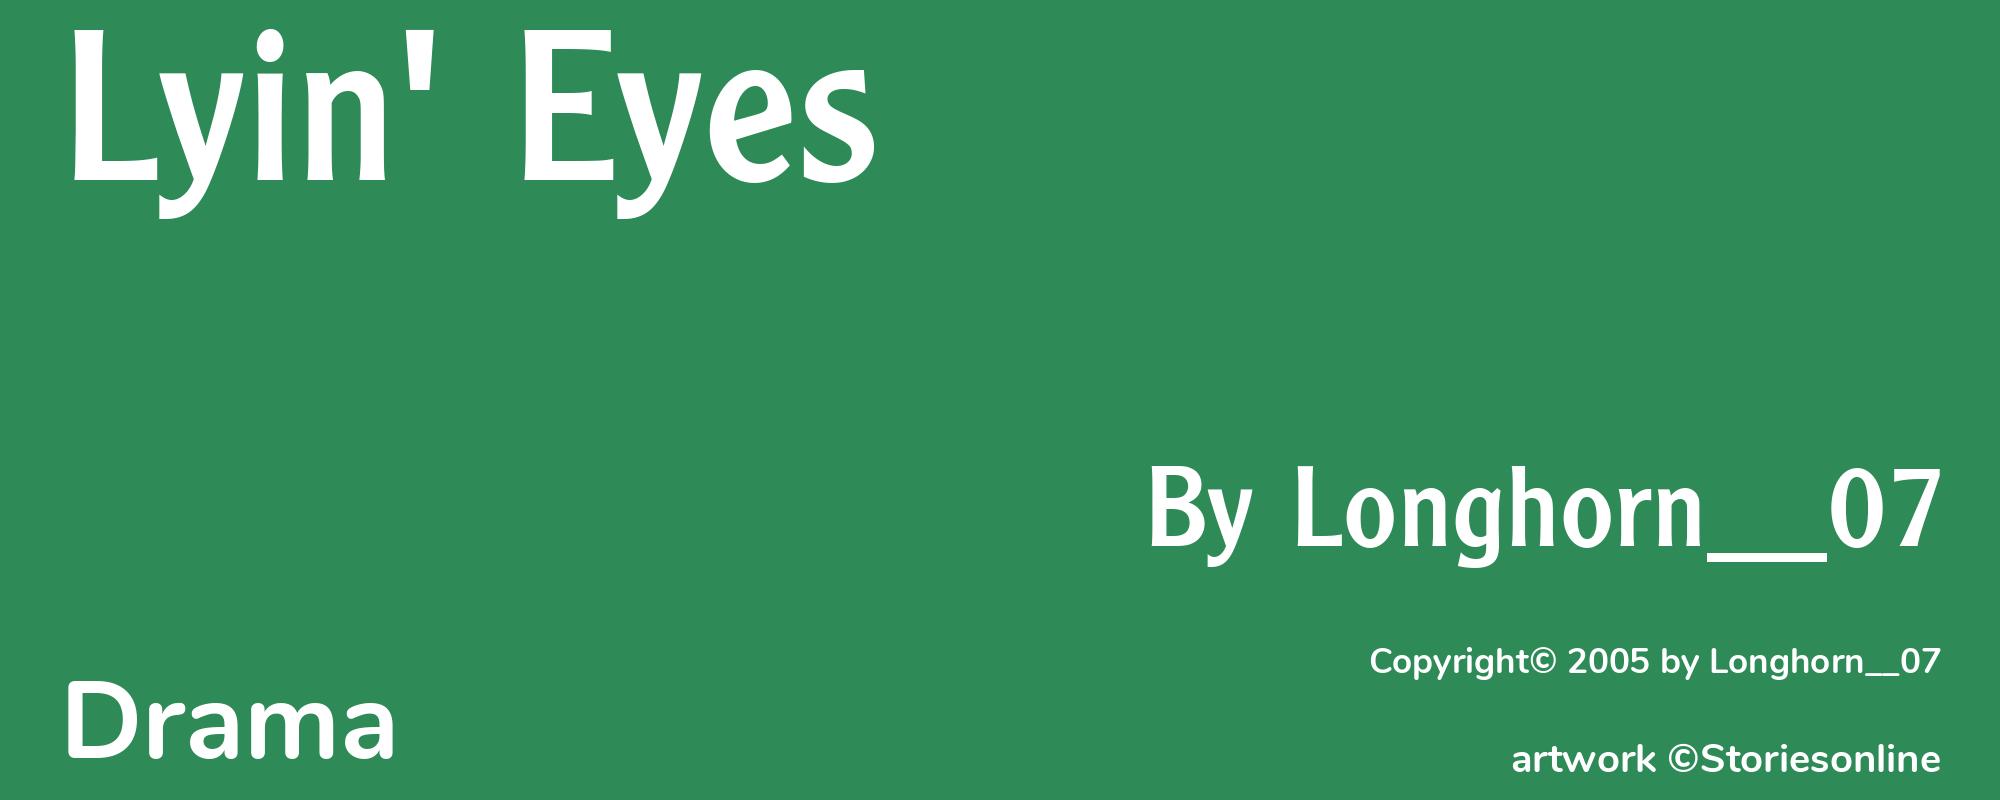 Lyin' Eyes - Cover